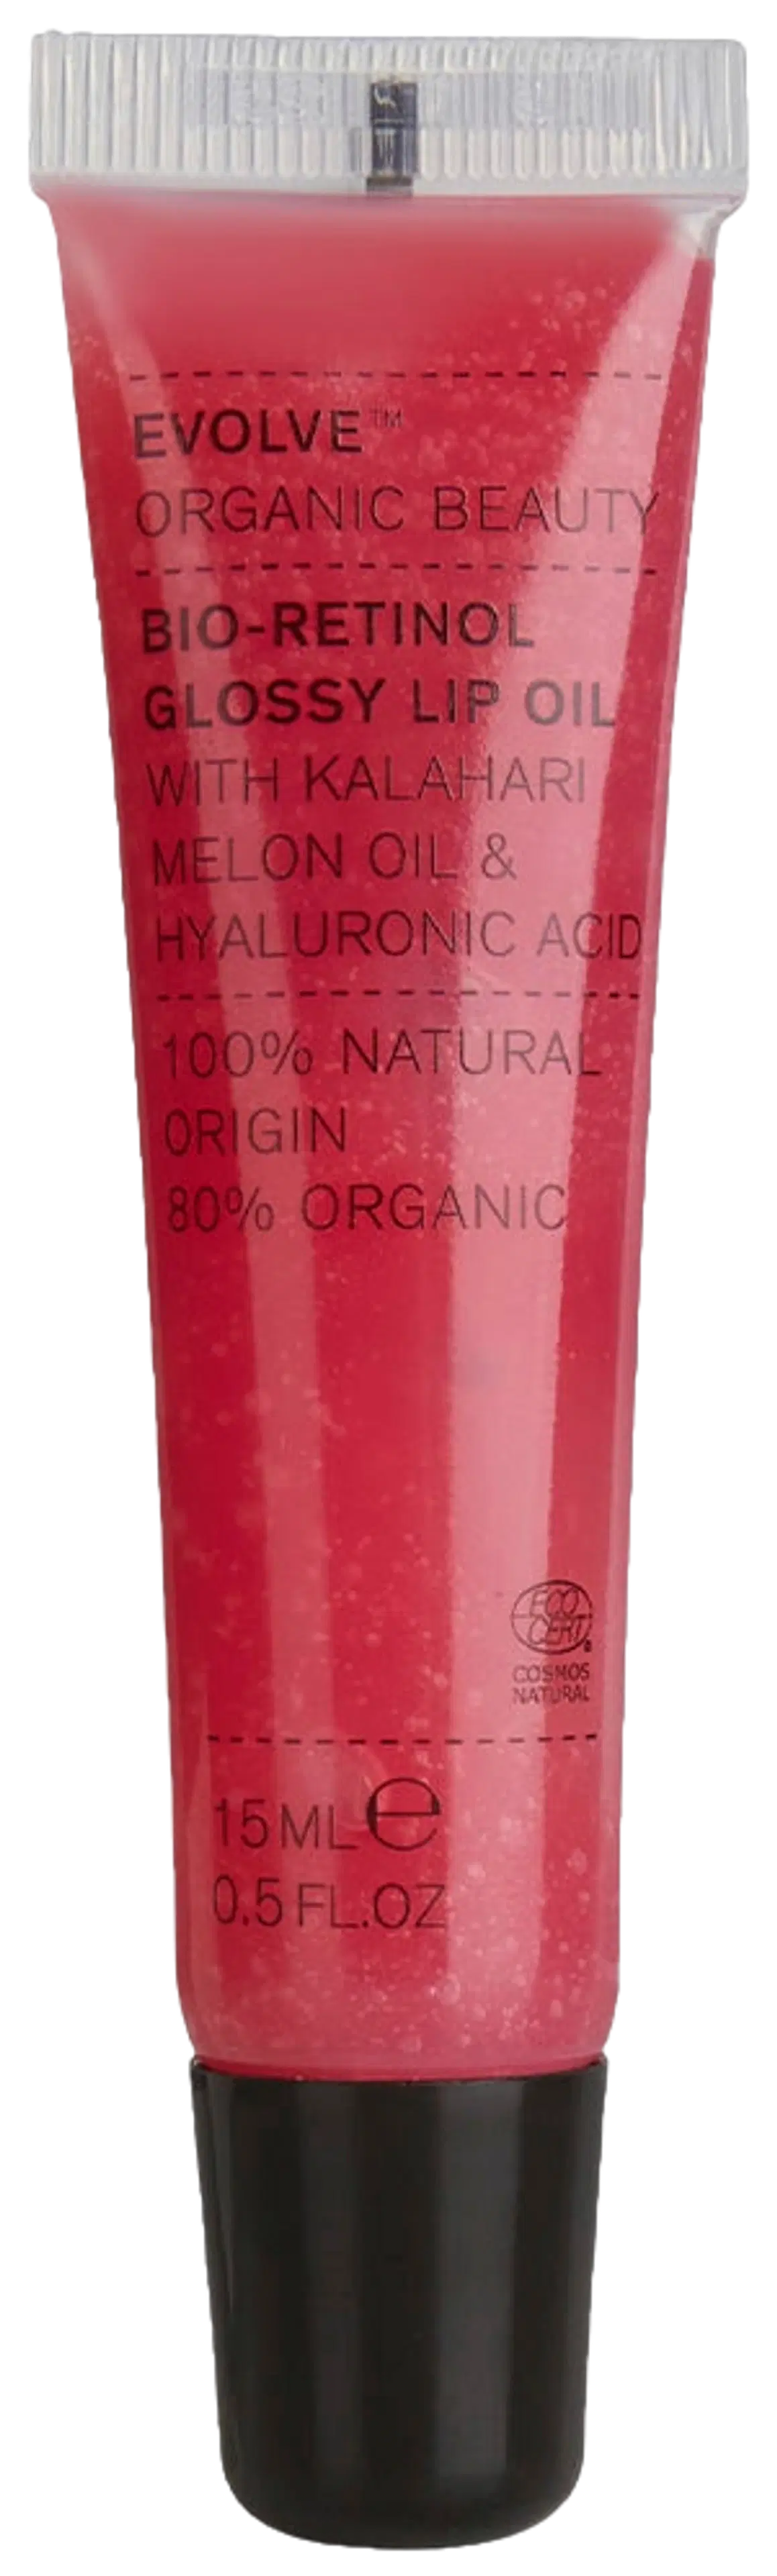 Evolve Organic Beauty Bio-Retinol Glossy Lip Oil 15ml